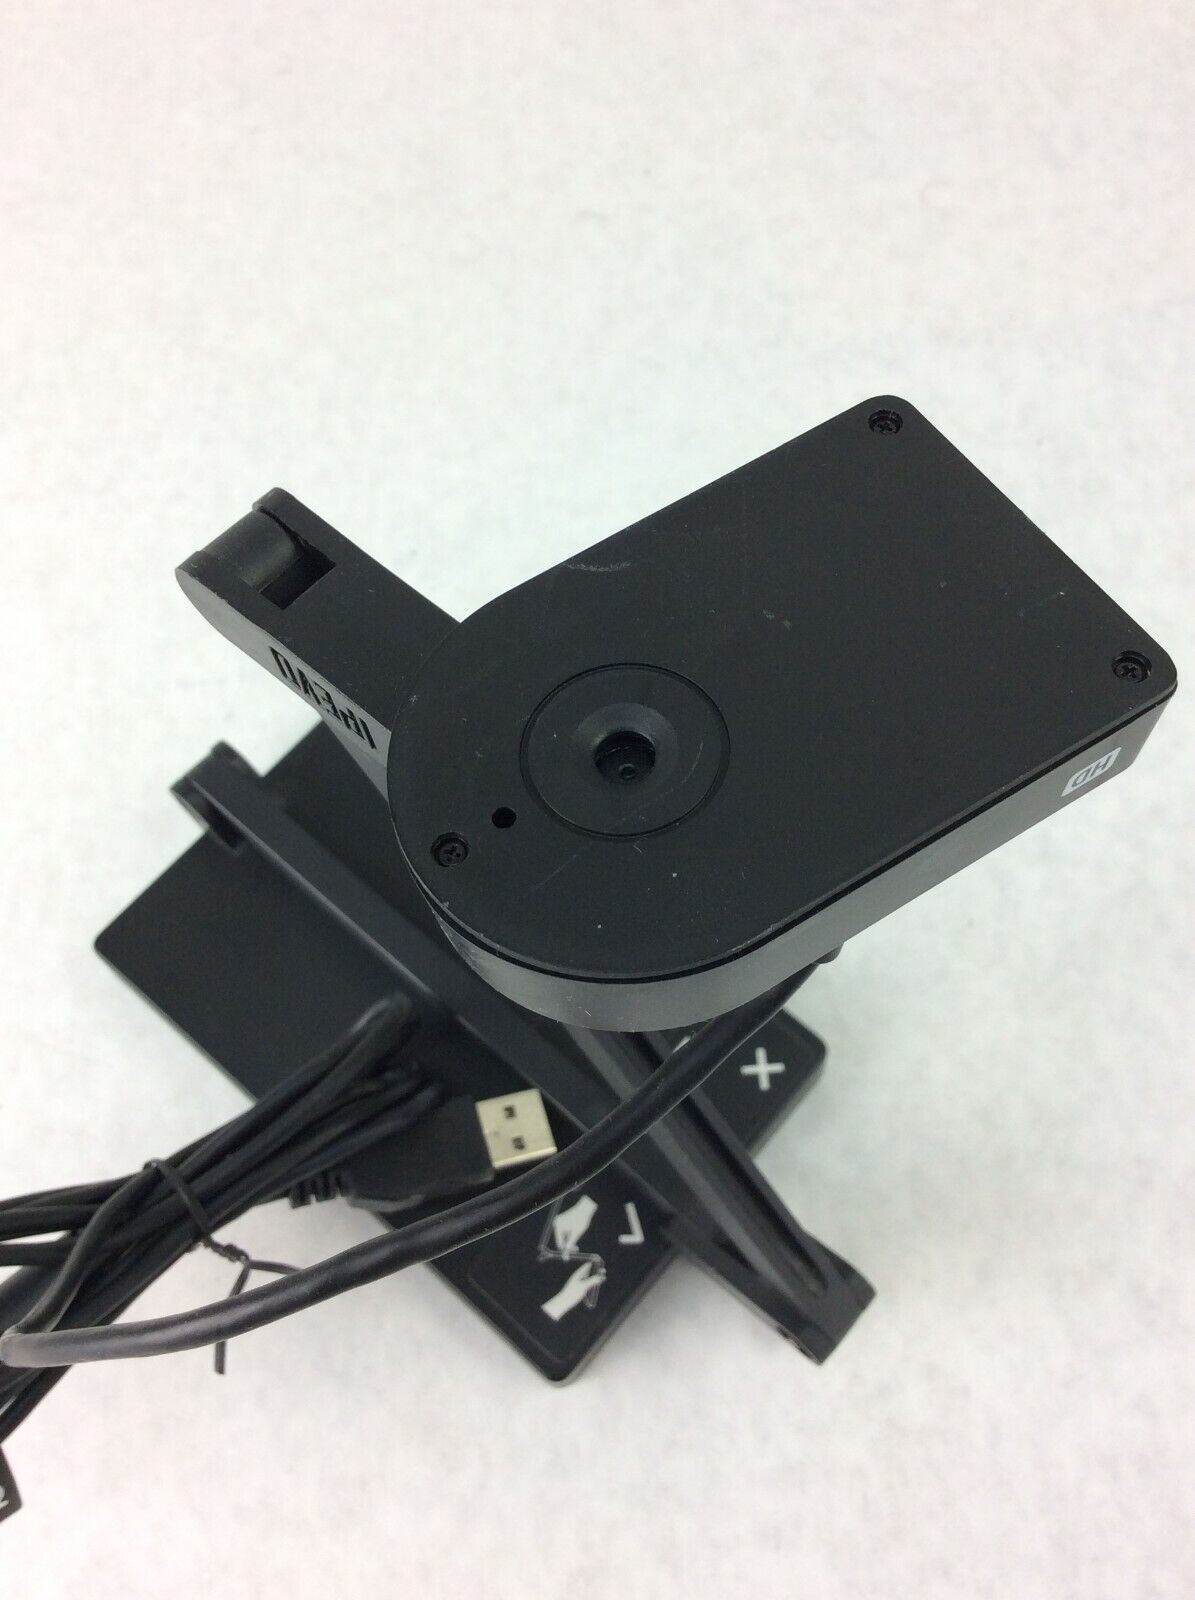 IPEVO Ziggi HD Plus High Definition USB Black Document Camera COVU-04IP - Tested